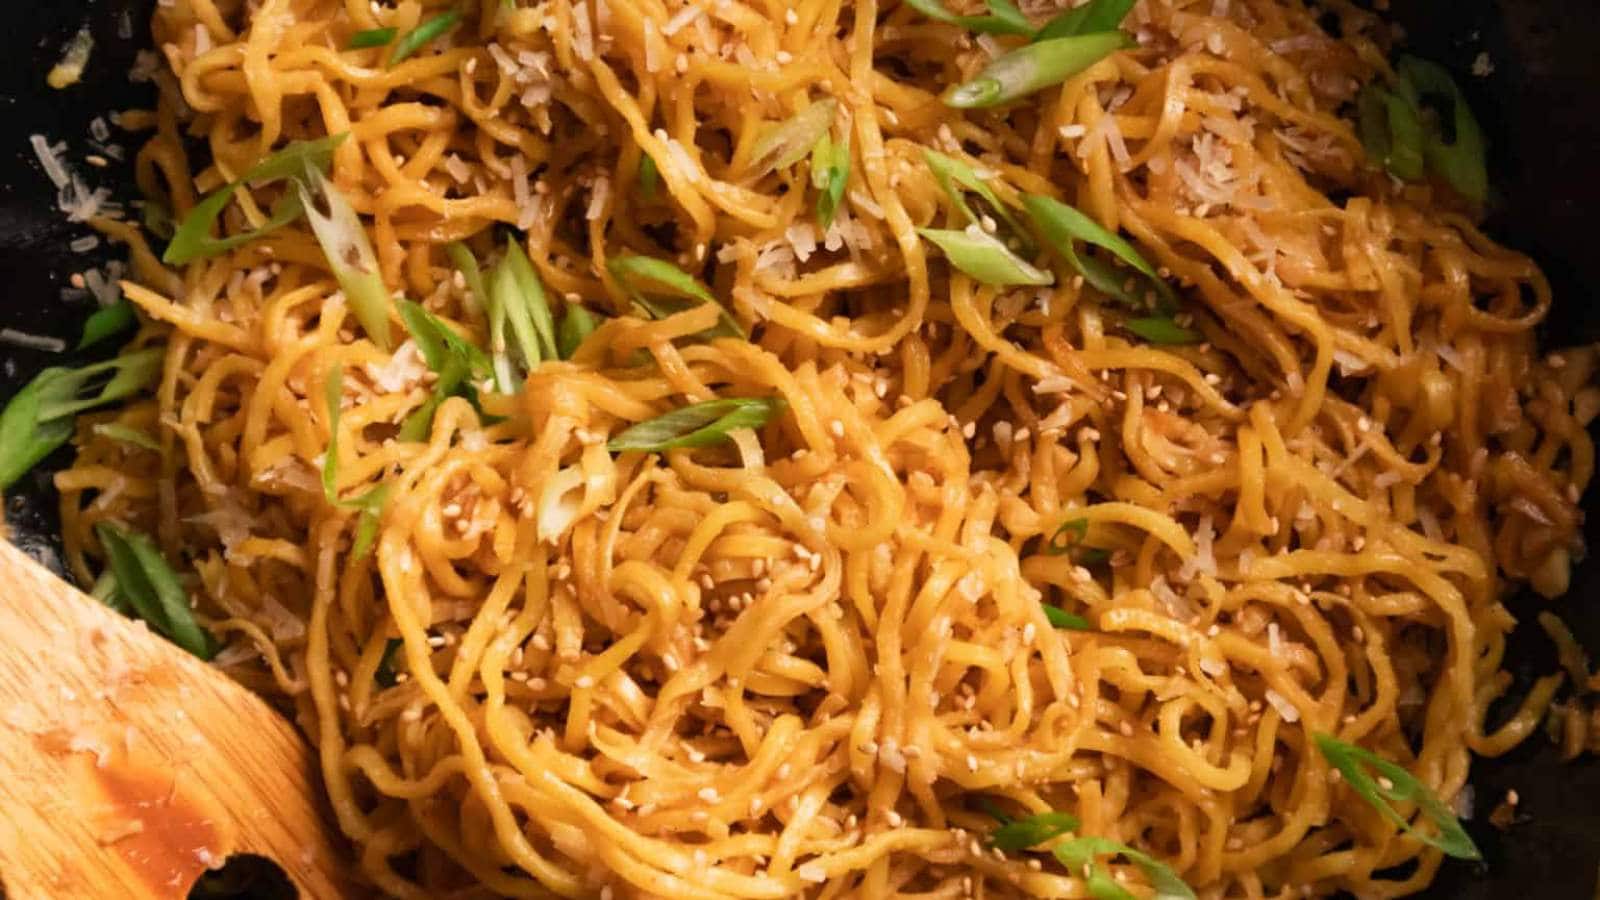 Asian Garlic Noodles recipe by Mikah Eats.